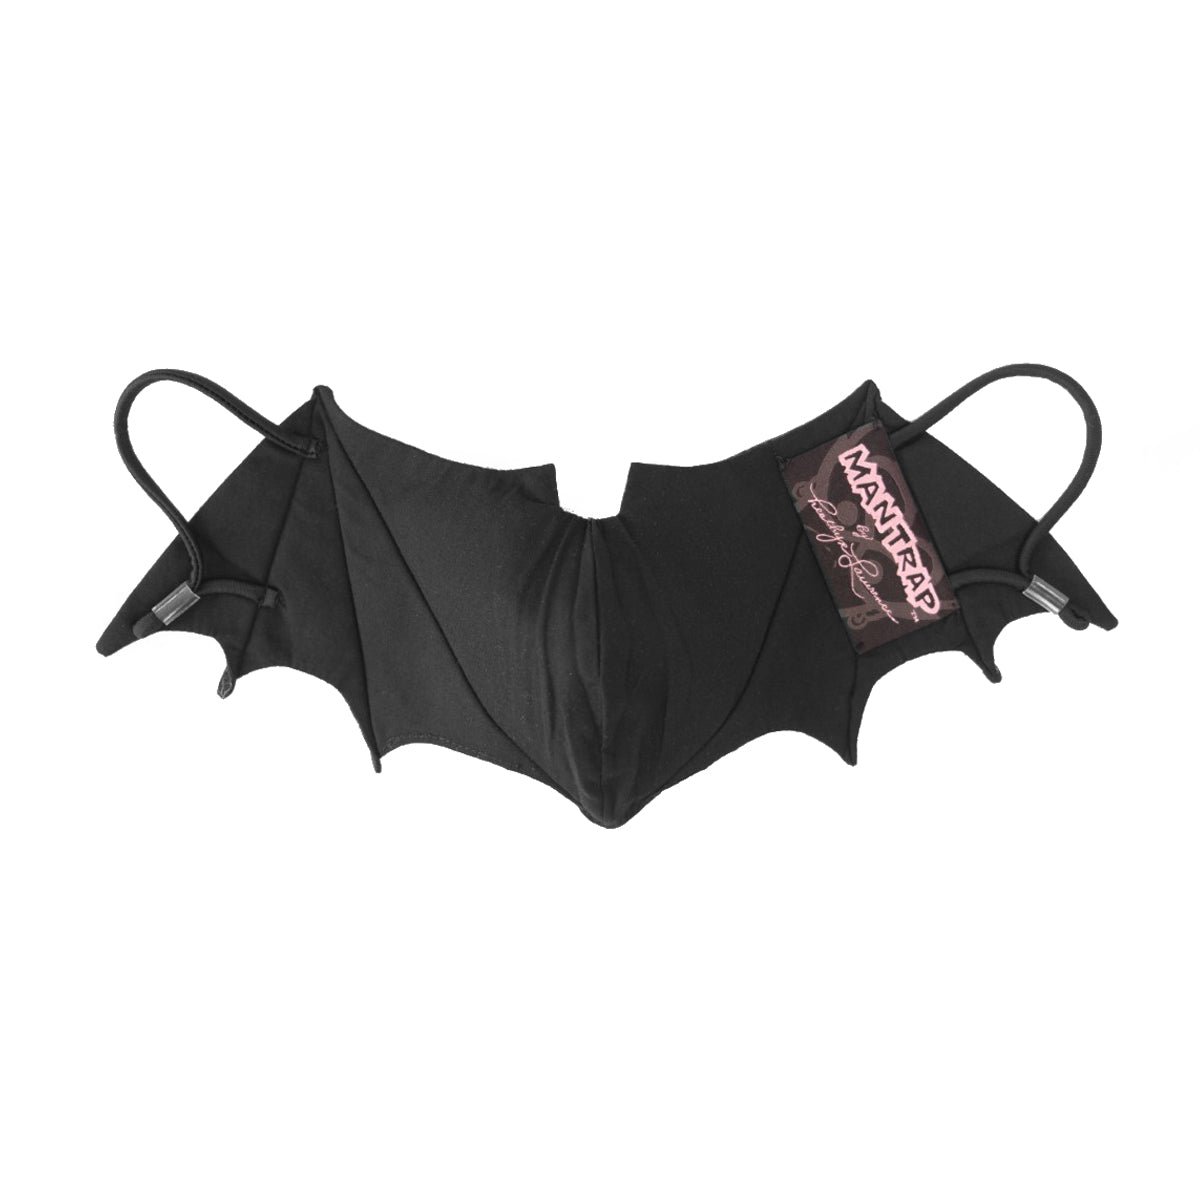 Spooky Bat Mask